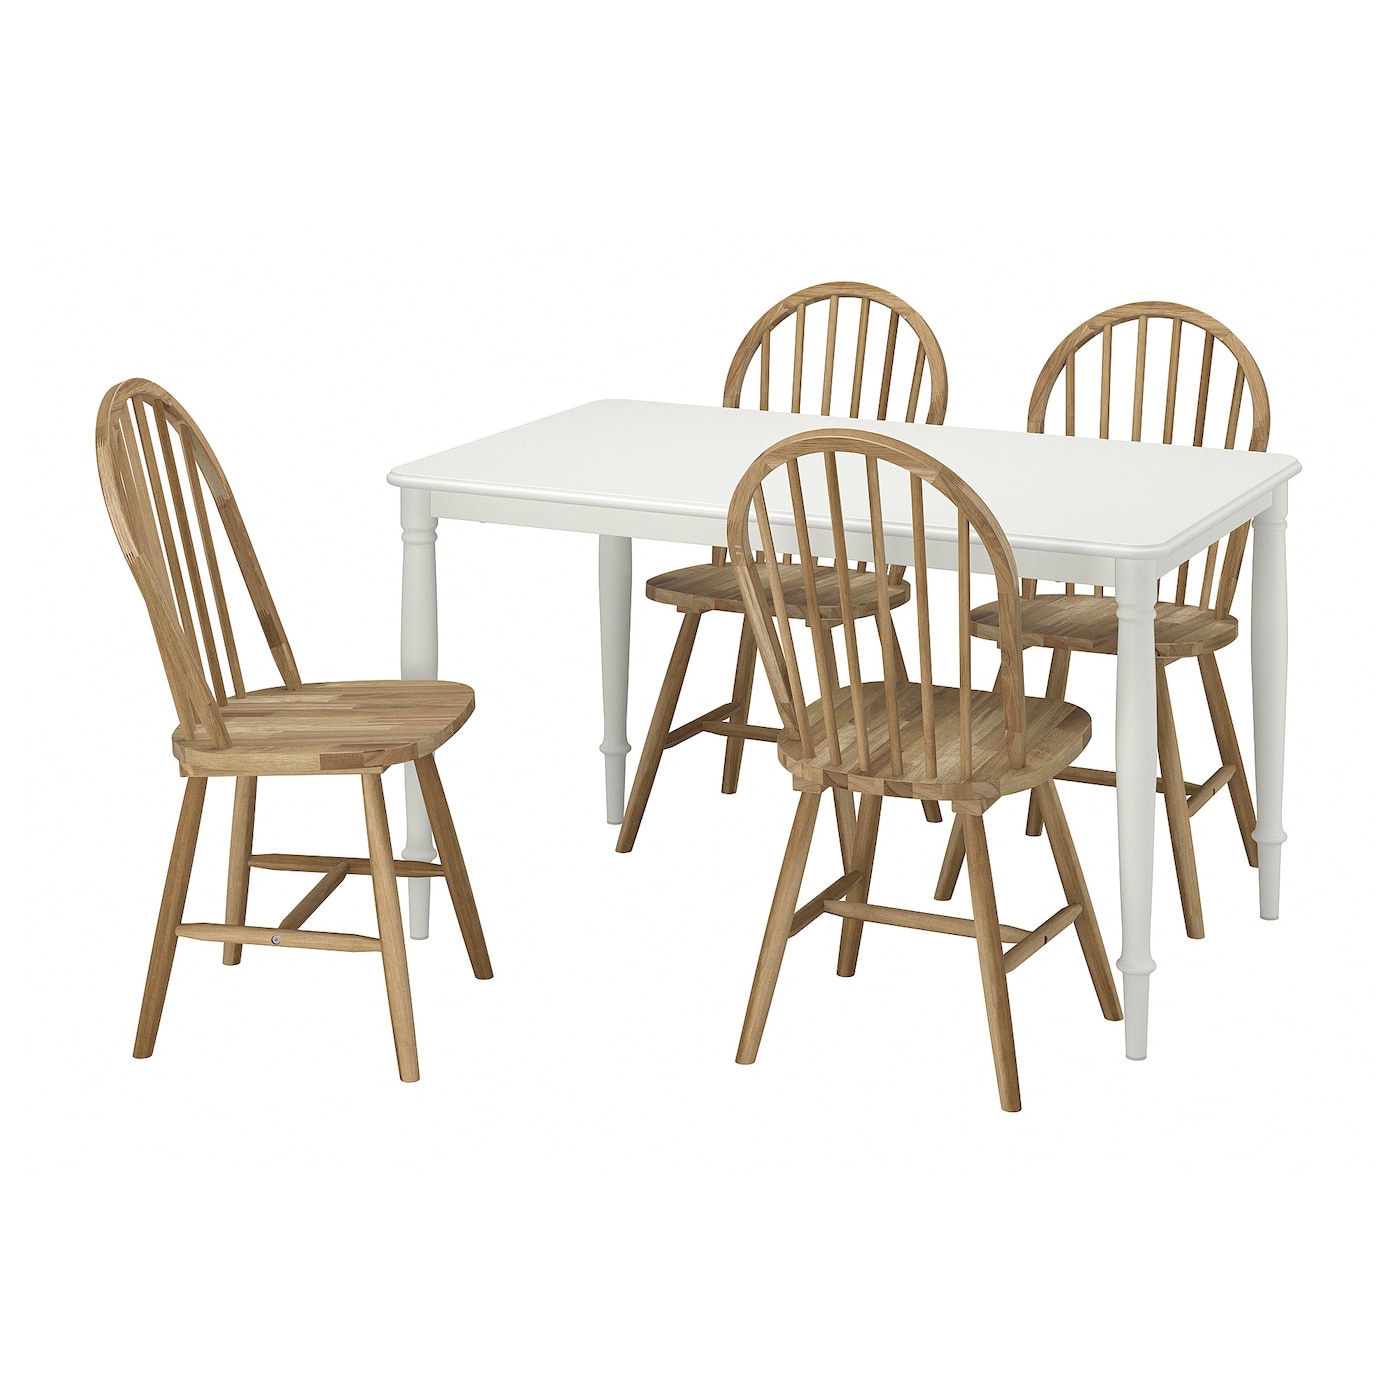 Стол и 4 стула - DANDERYD / SKOGSTA IKEA/ ДАНДЭРЮД / СКОГСТА ИКЕА, 130х75/94х43 см,  белый/под беленый дуб